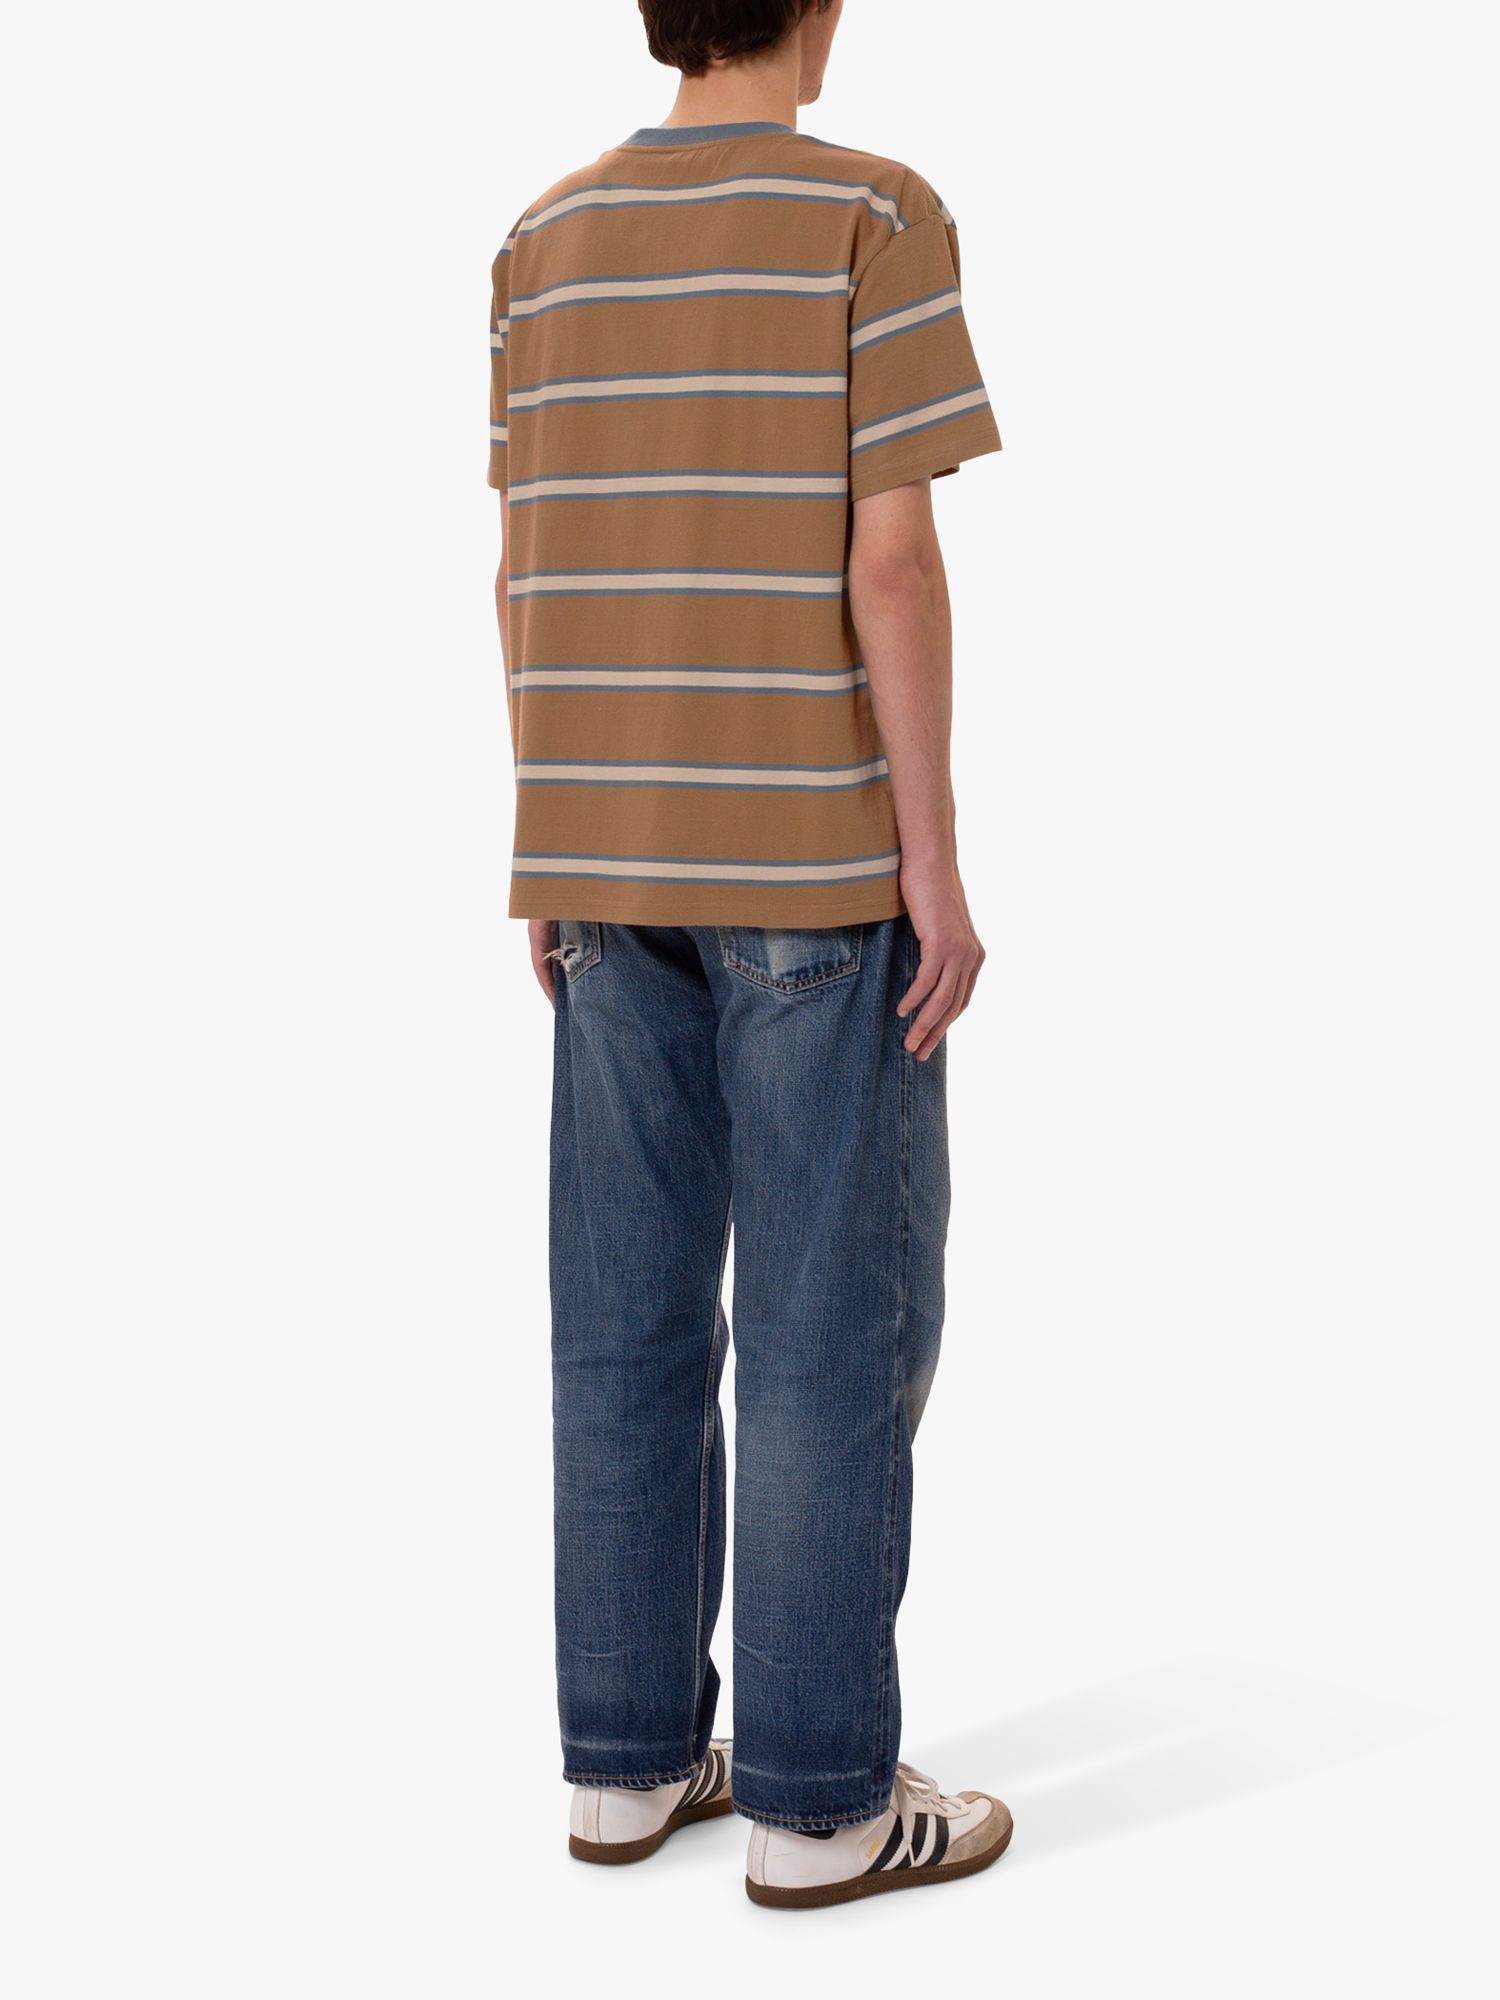 Nudie Jeans Leffe Stripe T-Shirt, Brown/White, XL